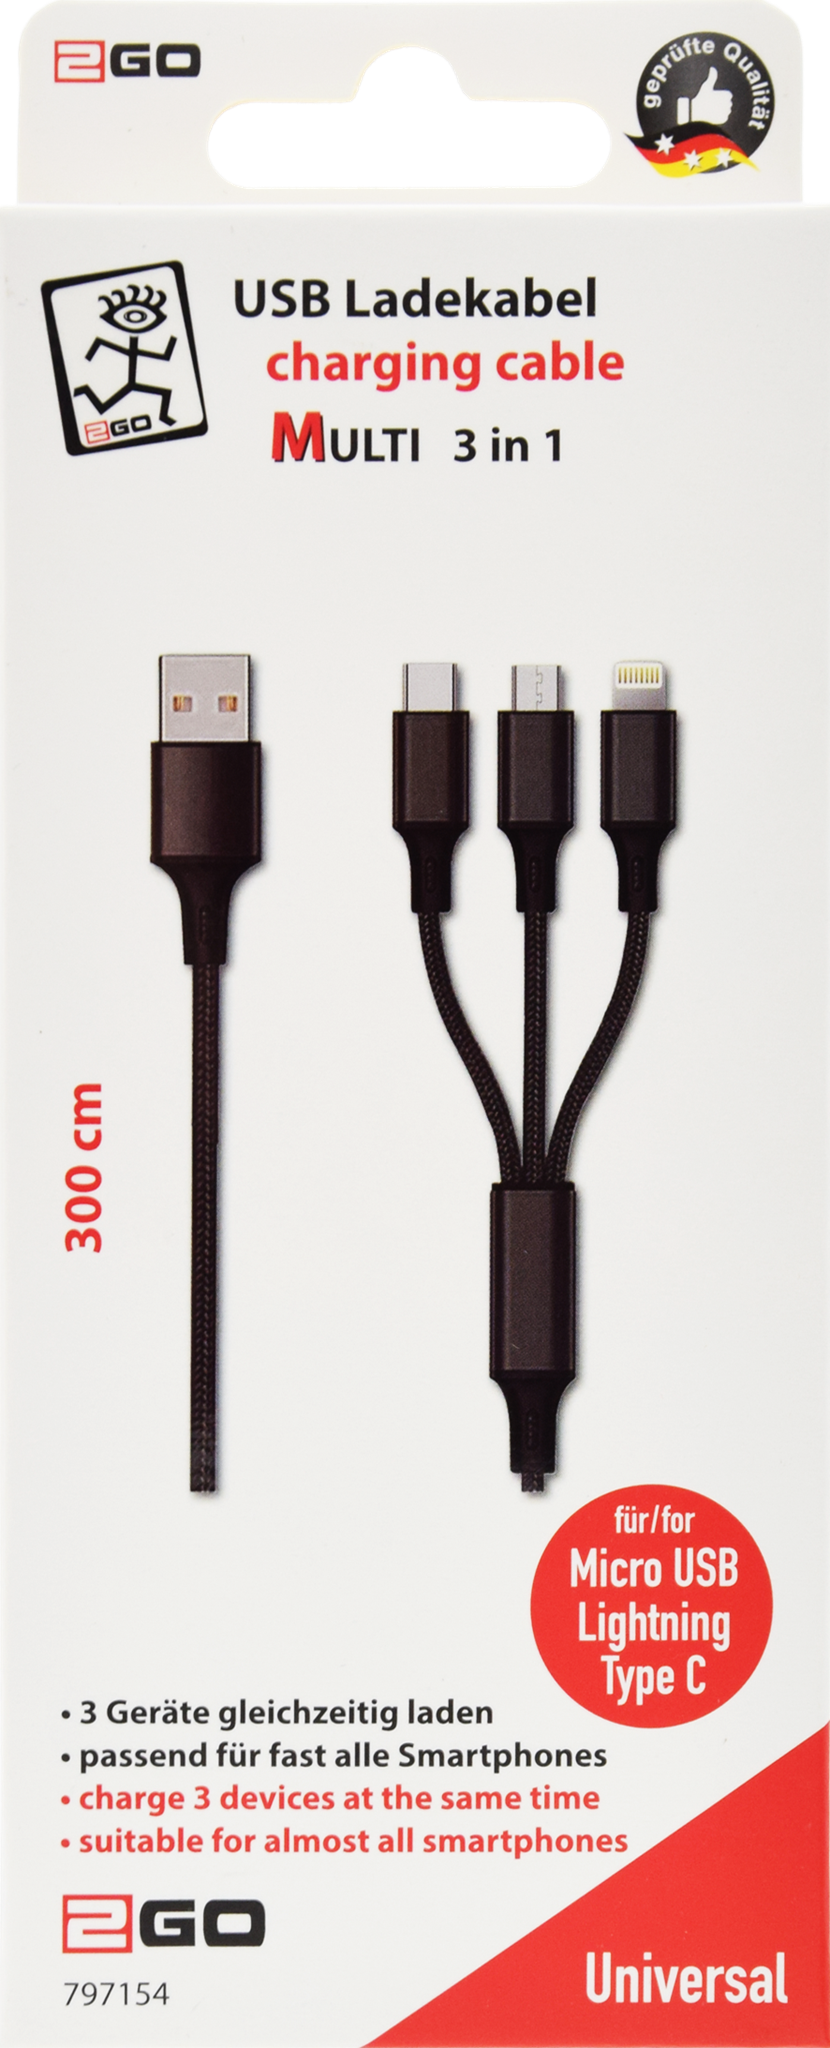 2GO Mobile.net - B2C -. 3 in 1 USB Ladekabel - schwarz - 300cm